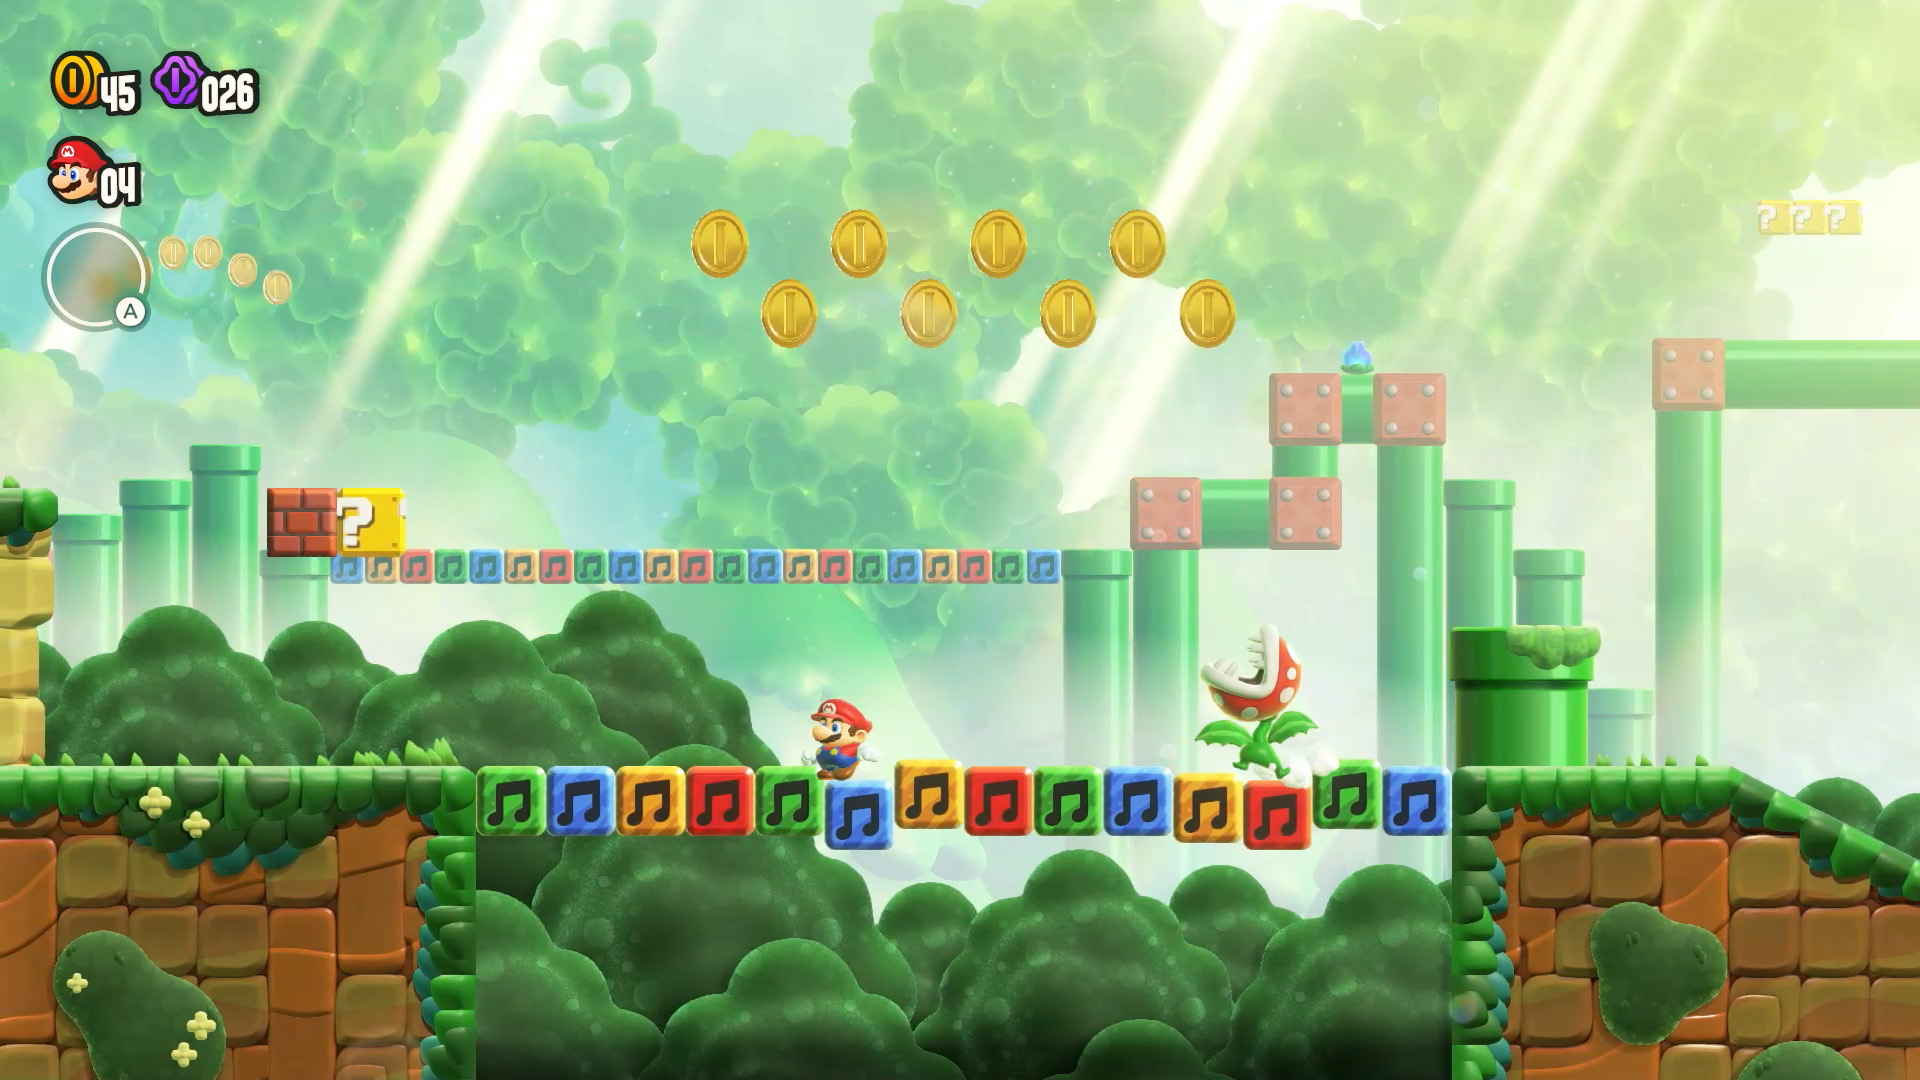 Super Mario Bros. Wonder [Nintendo - Switch